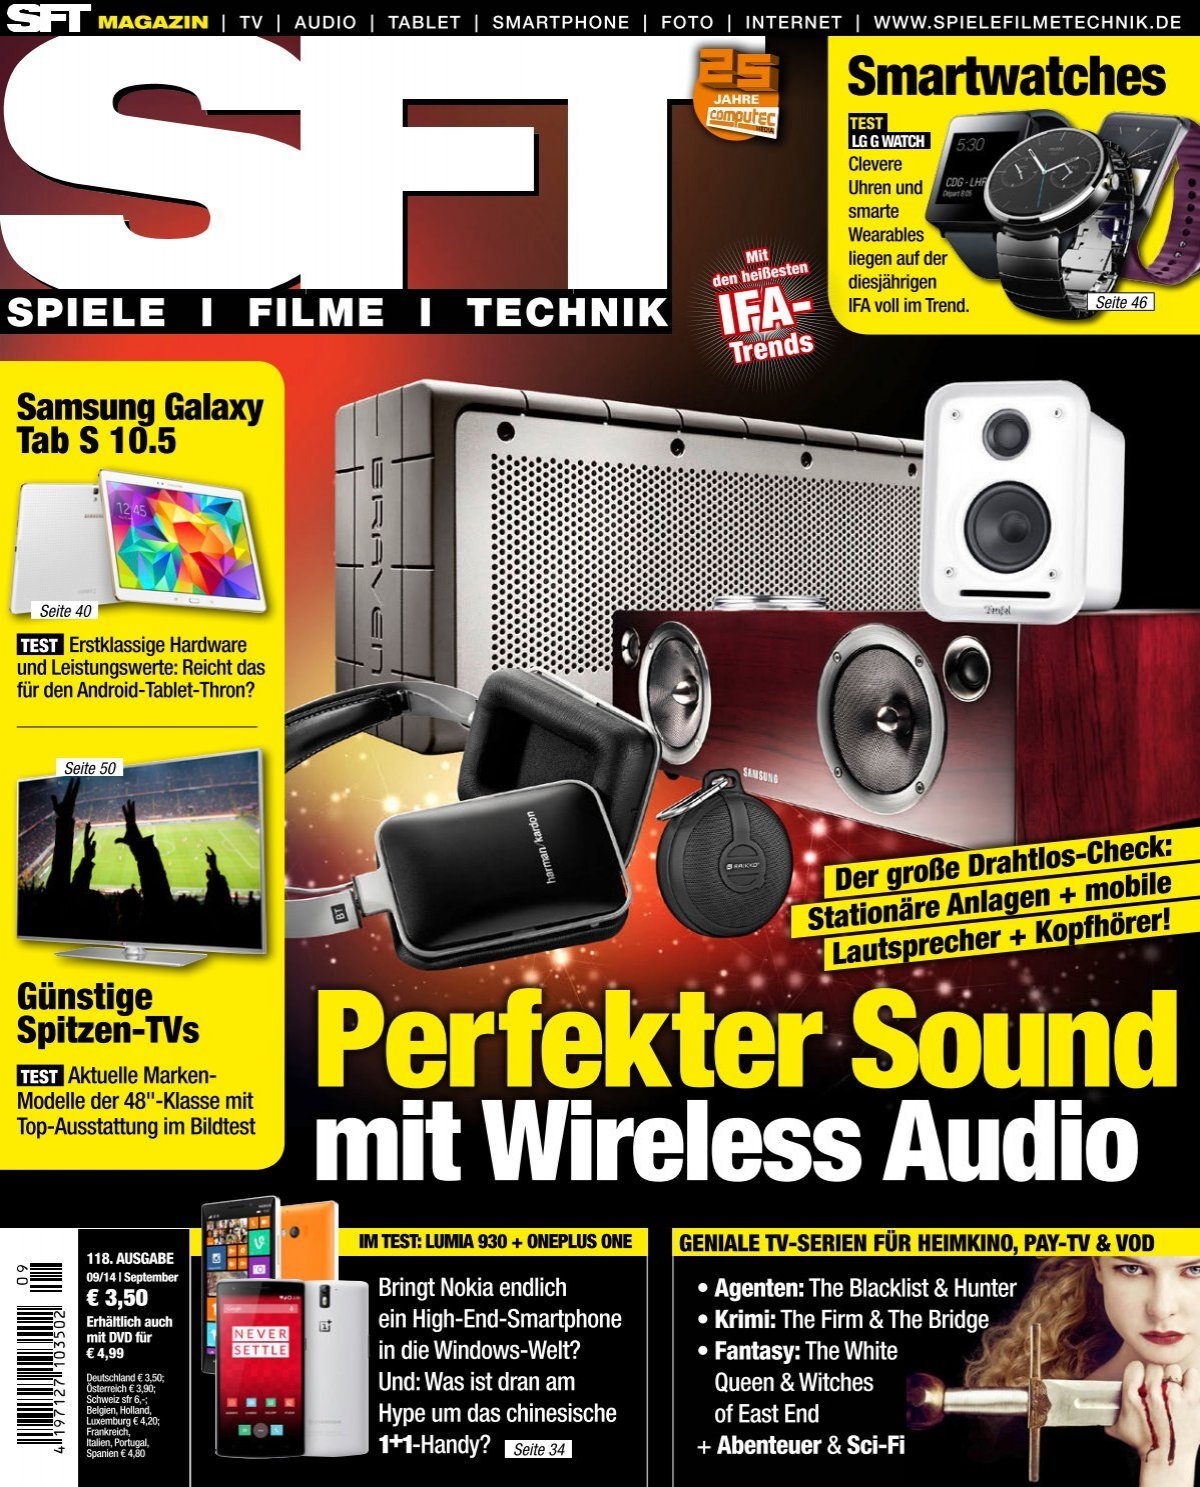 SFT – Spiele Filme Technik - Magazin Perfekter Sound mit Wireless